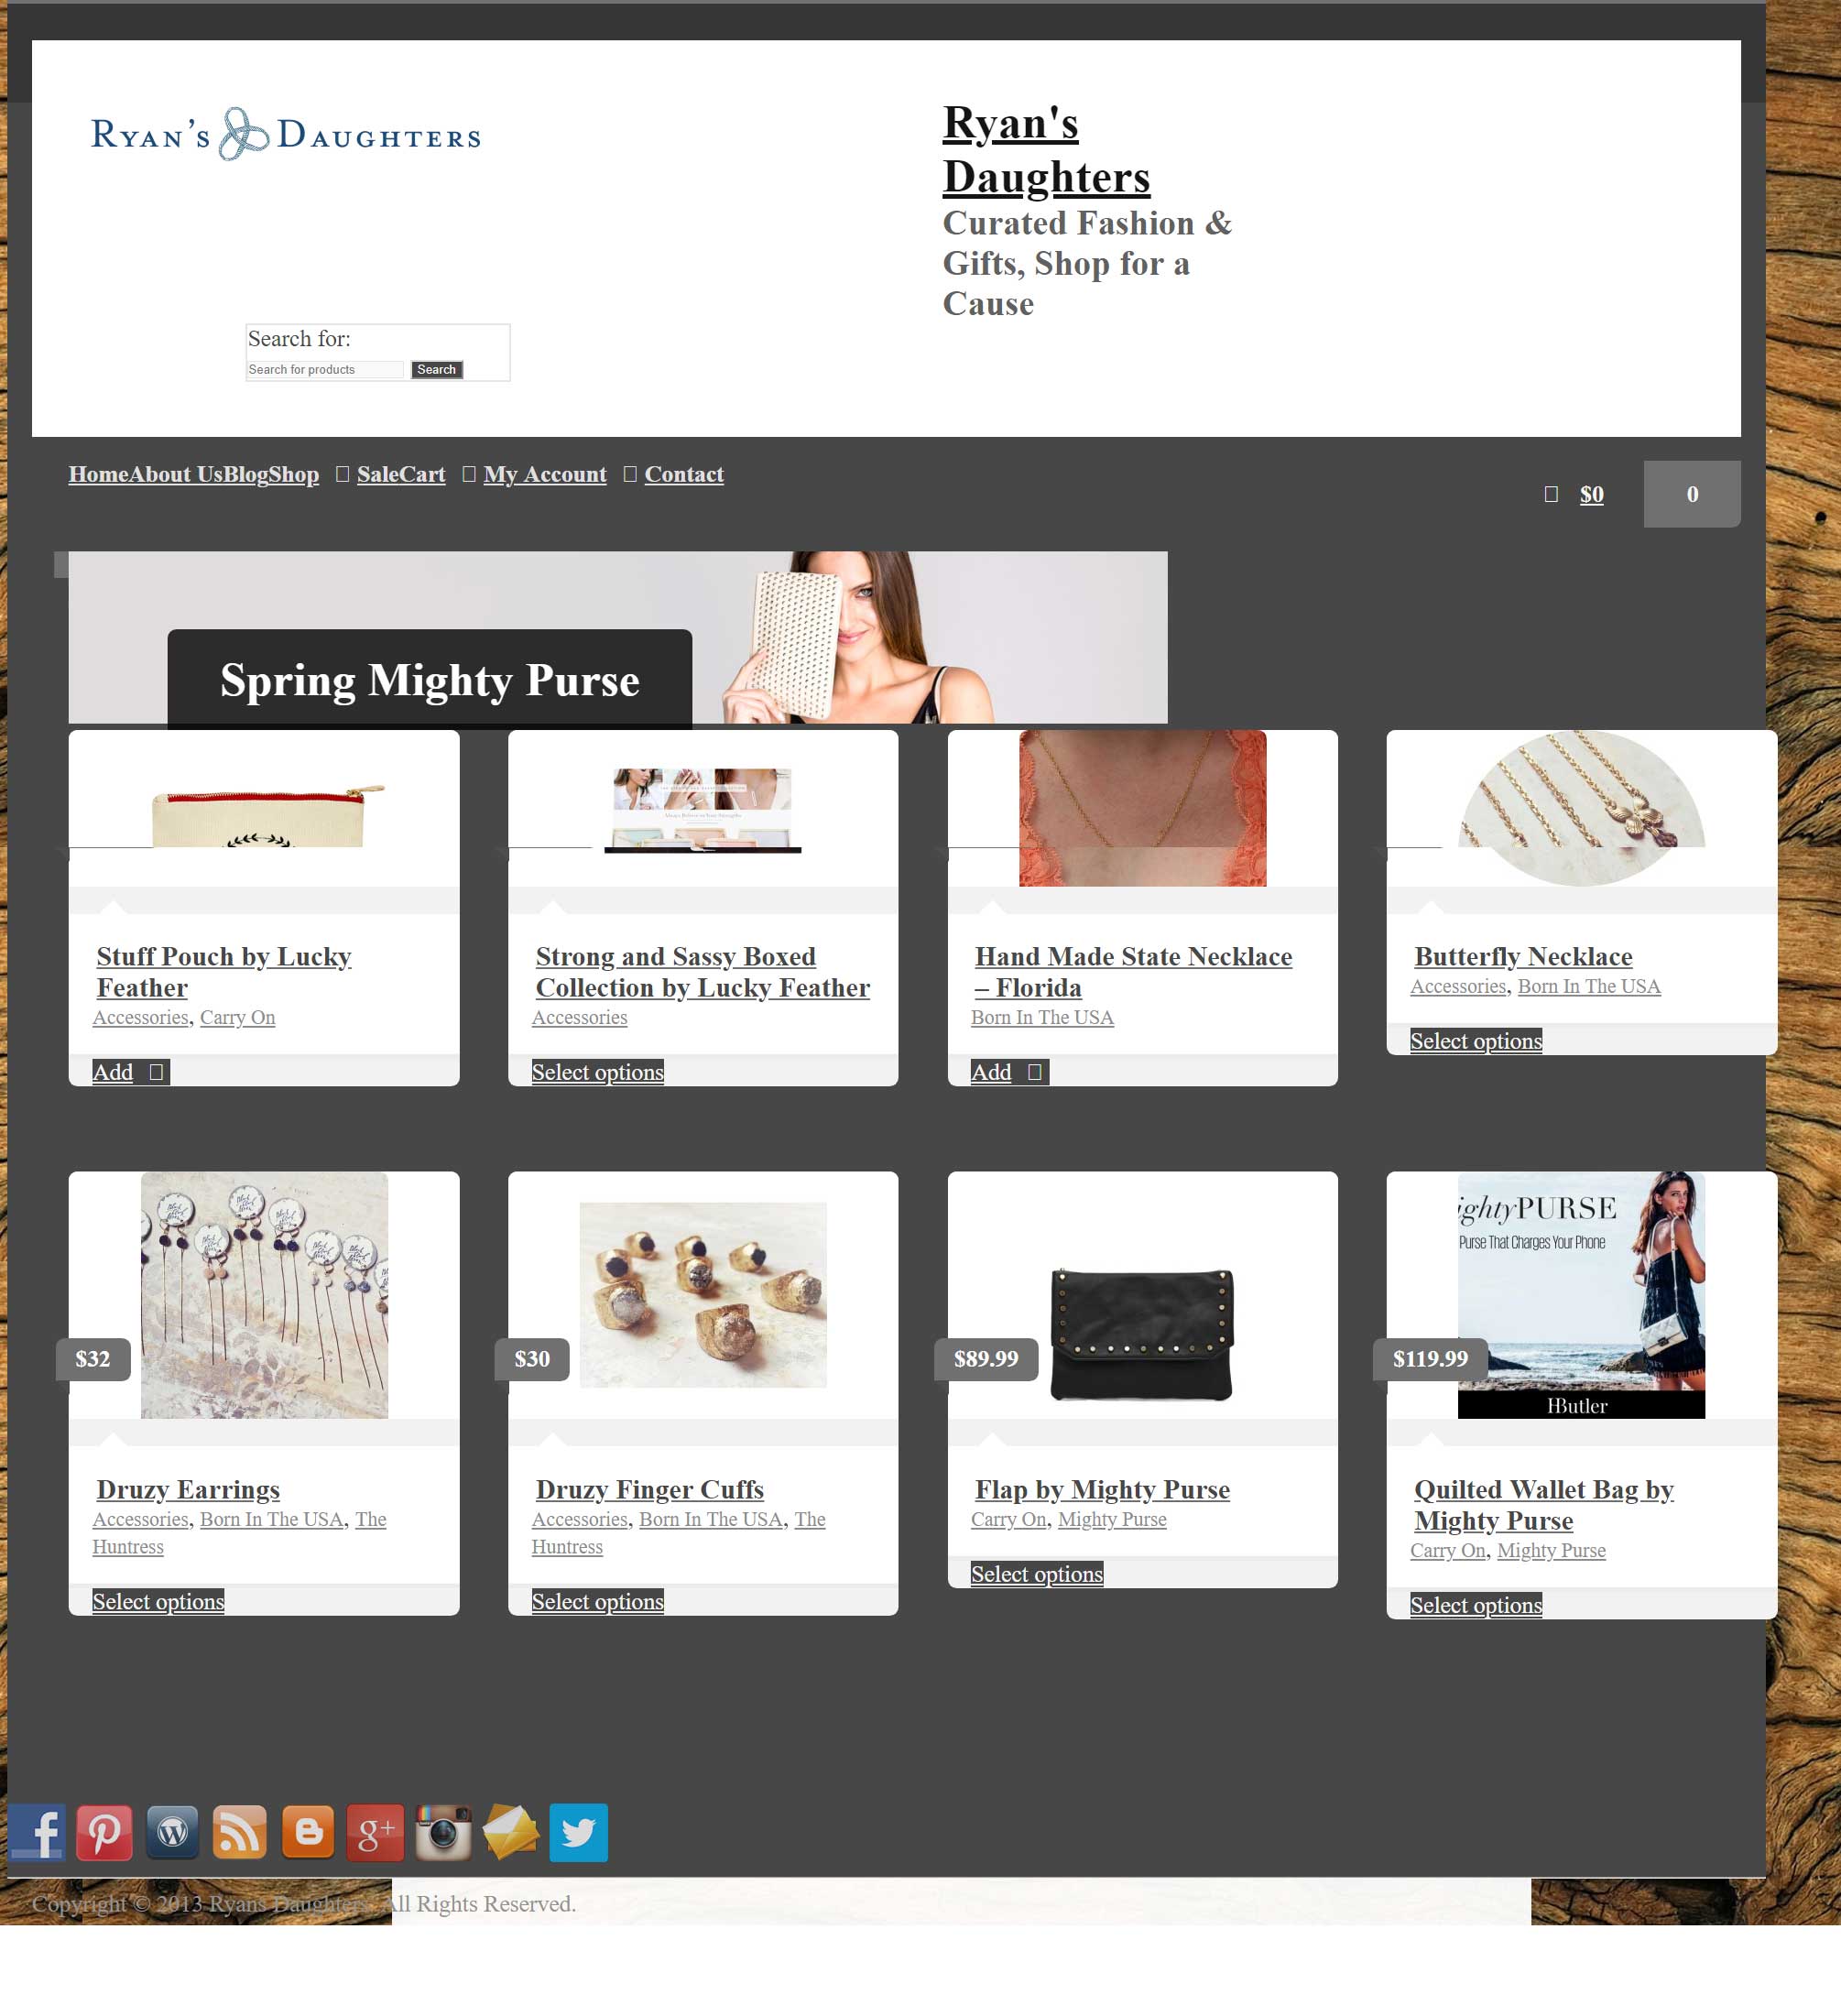 ryans-daughters-online-shop-before-multiverse-website-redesign